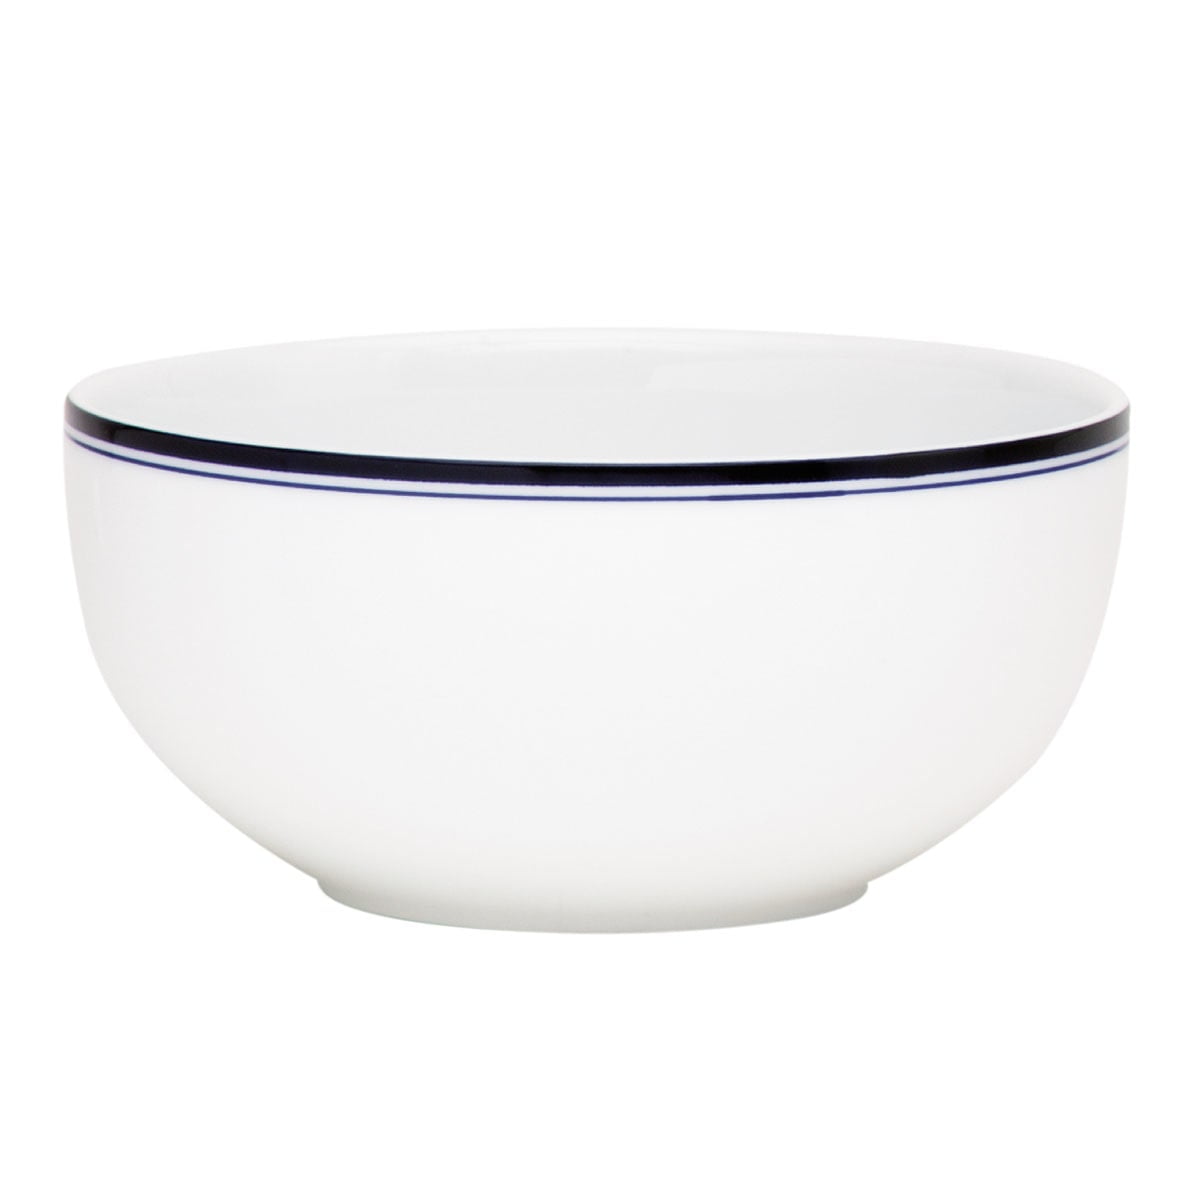 Godinger godinger mixing bowls with lids, plastic nesting bowls